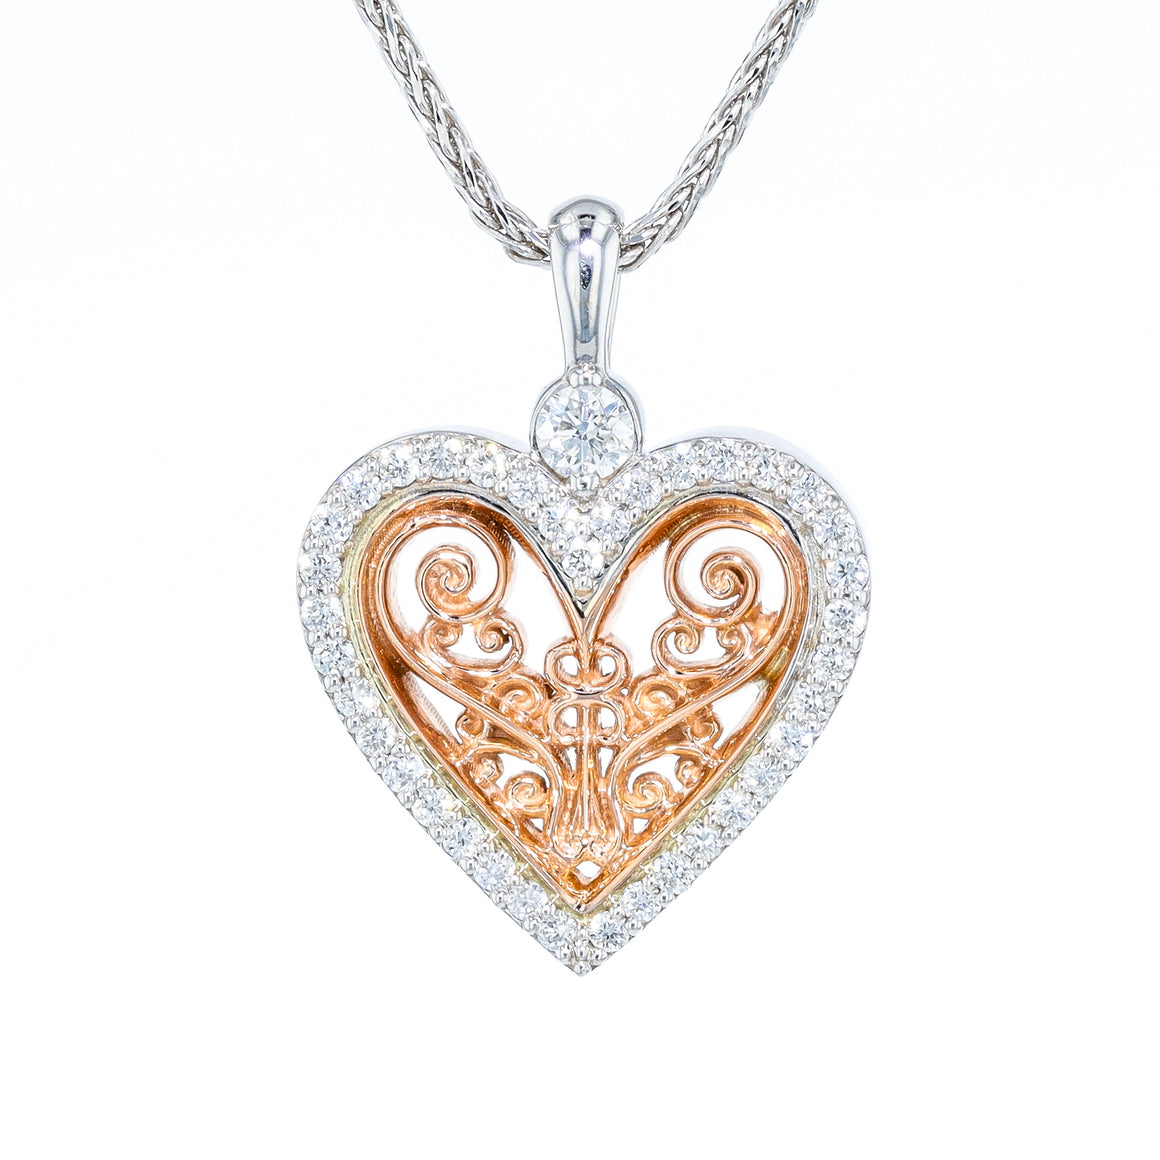 The "Unity Heart" Diamond Pendant by Michael Letney